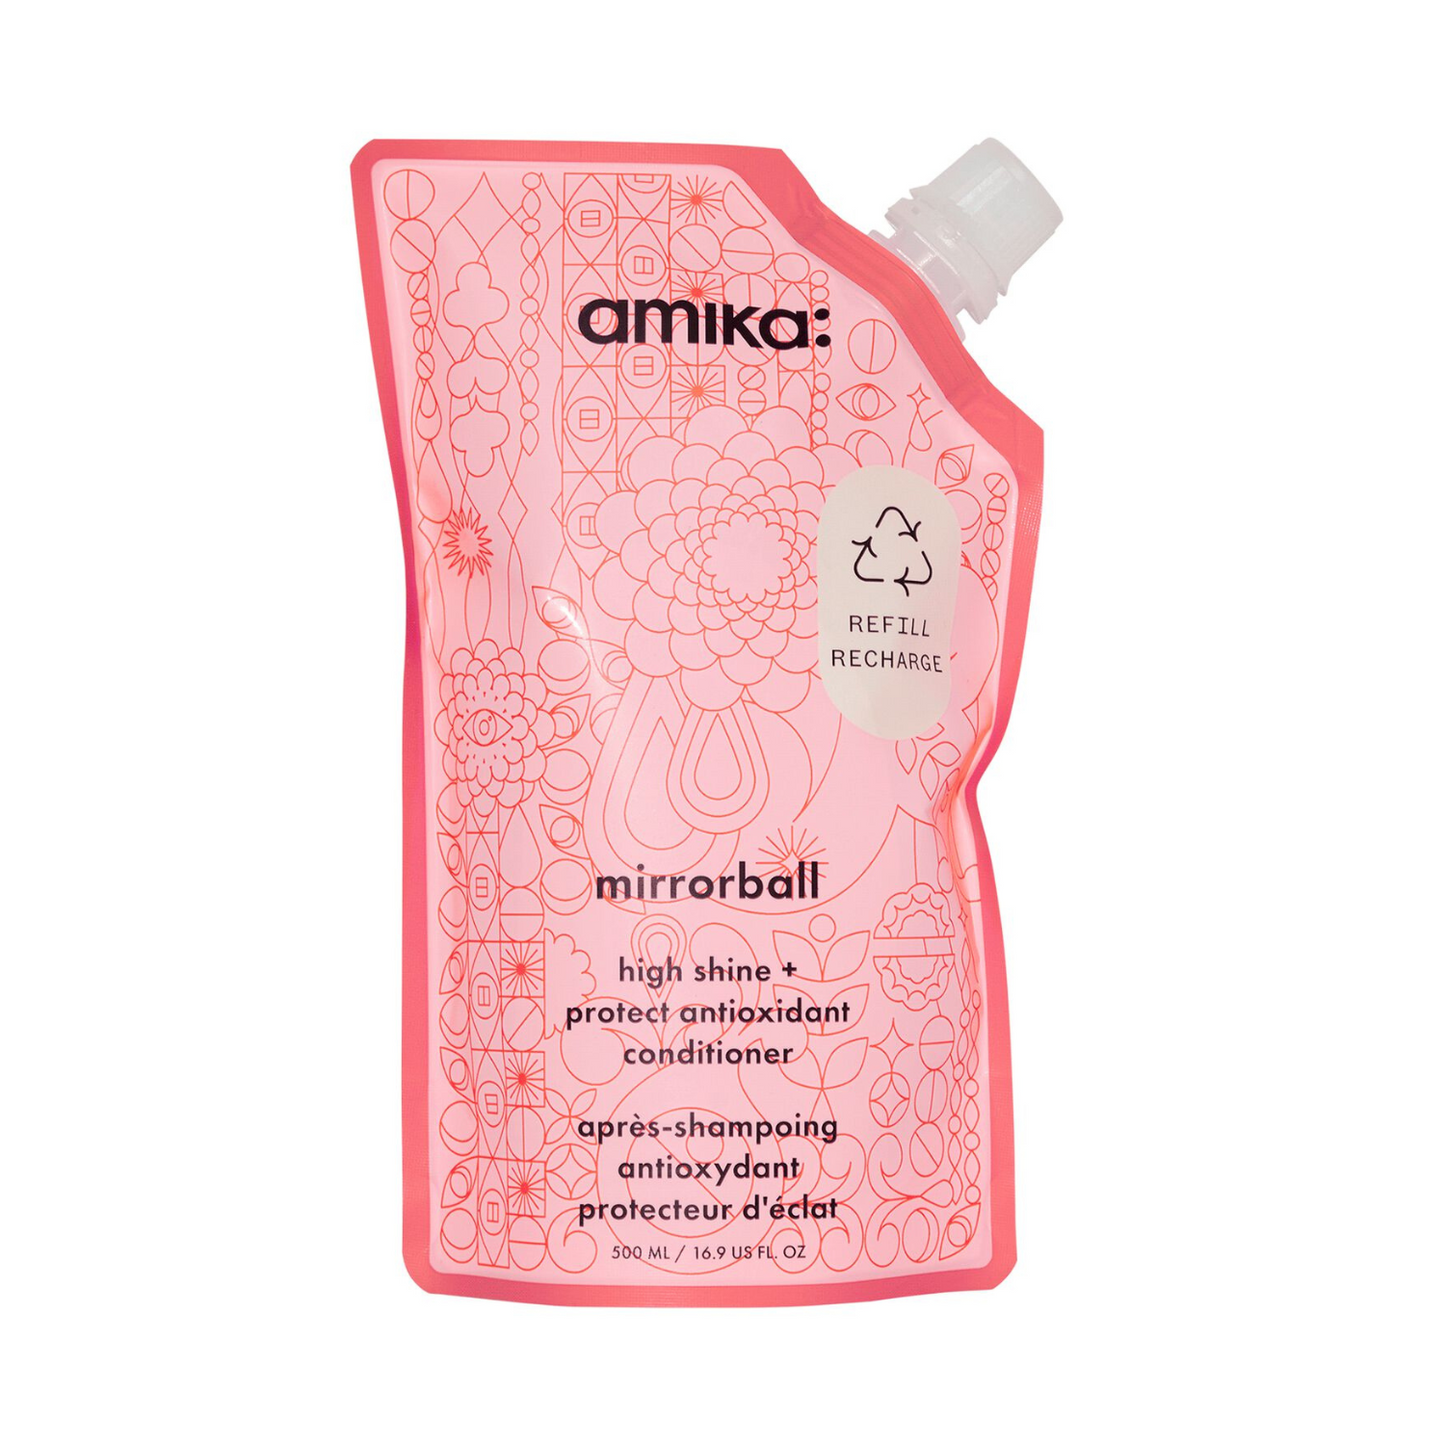 amika - Mirrorball High Shine & Protect Antioxidant Conditioner